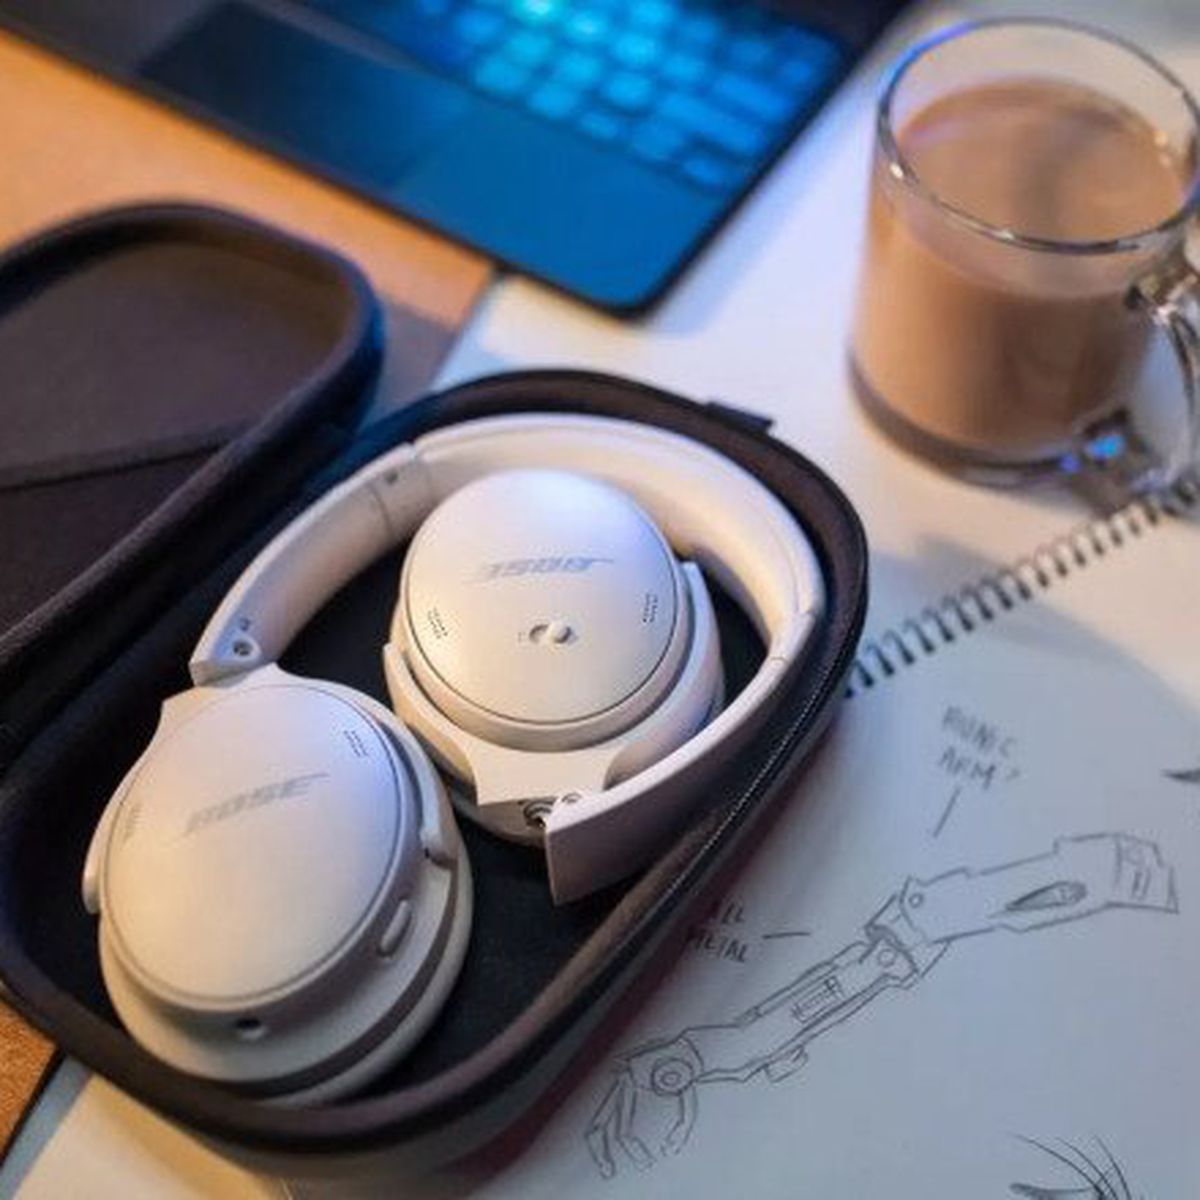 Bose QuietComfort 45 Headphones Leaked Ahead of Impending Launch 